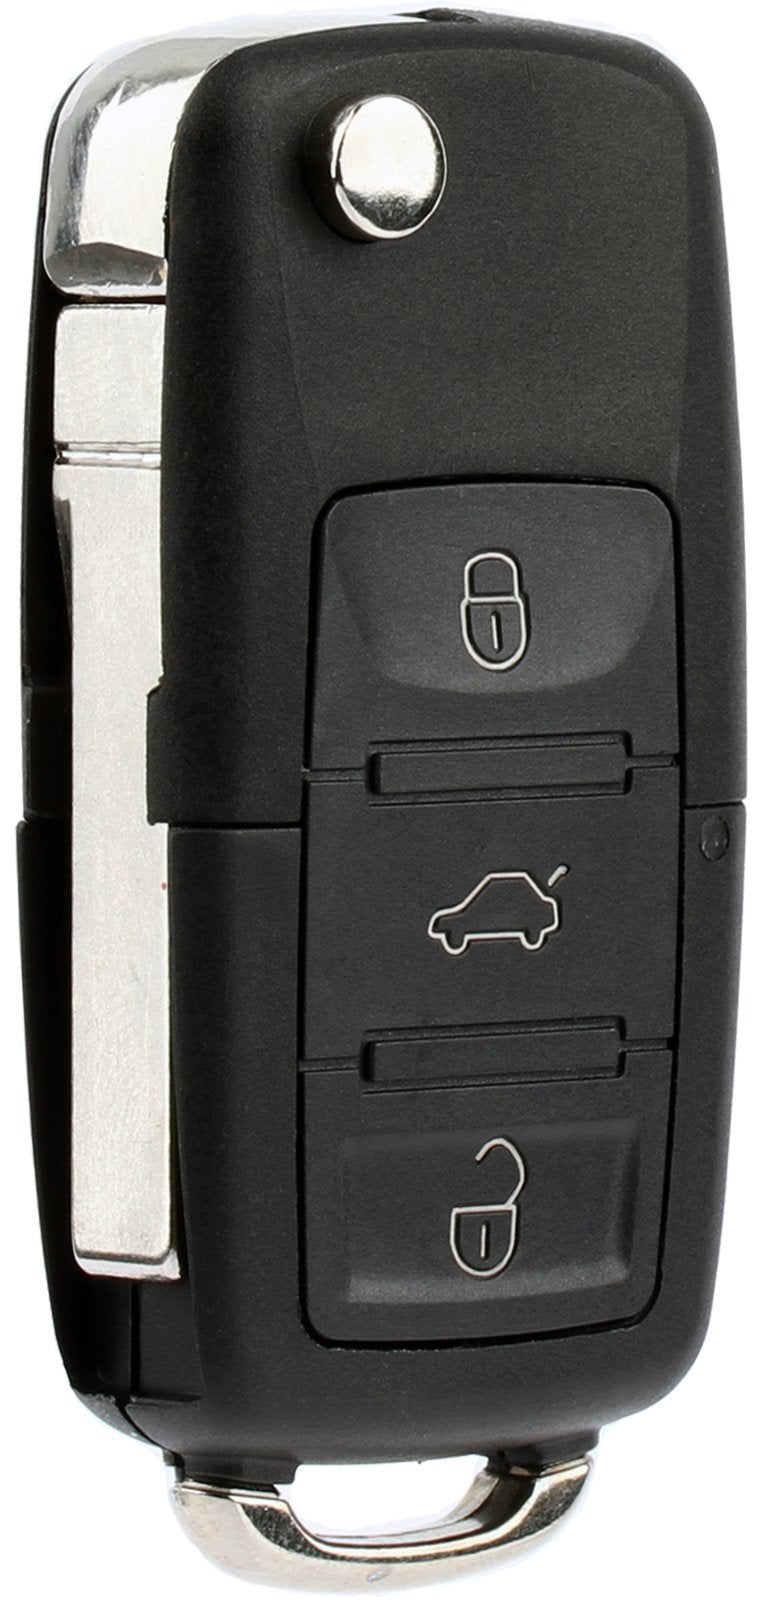  [AUSTRALIA] - KeylessOption Keyless Entry Remote Control Car Flip Key Fob Replacement for HLO1J0959753AM, HLO1J0959753DC